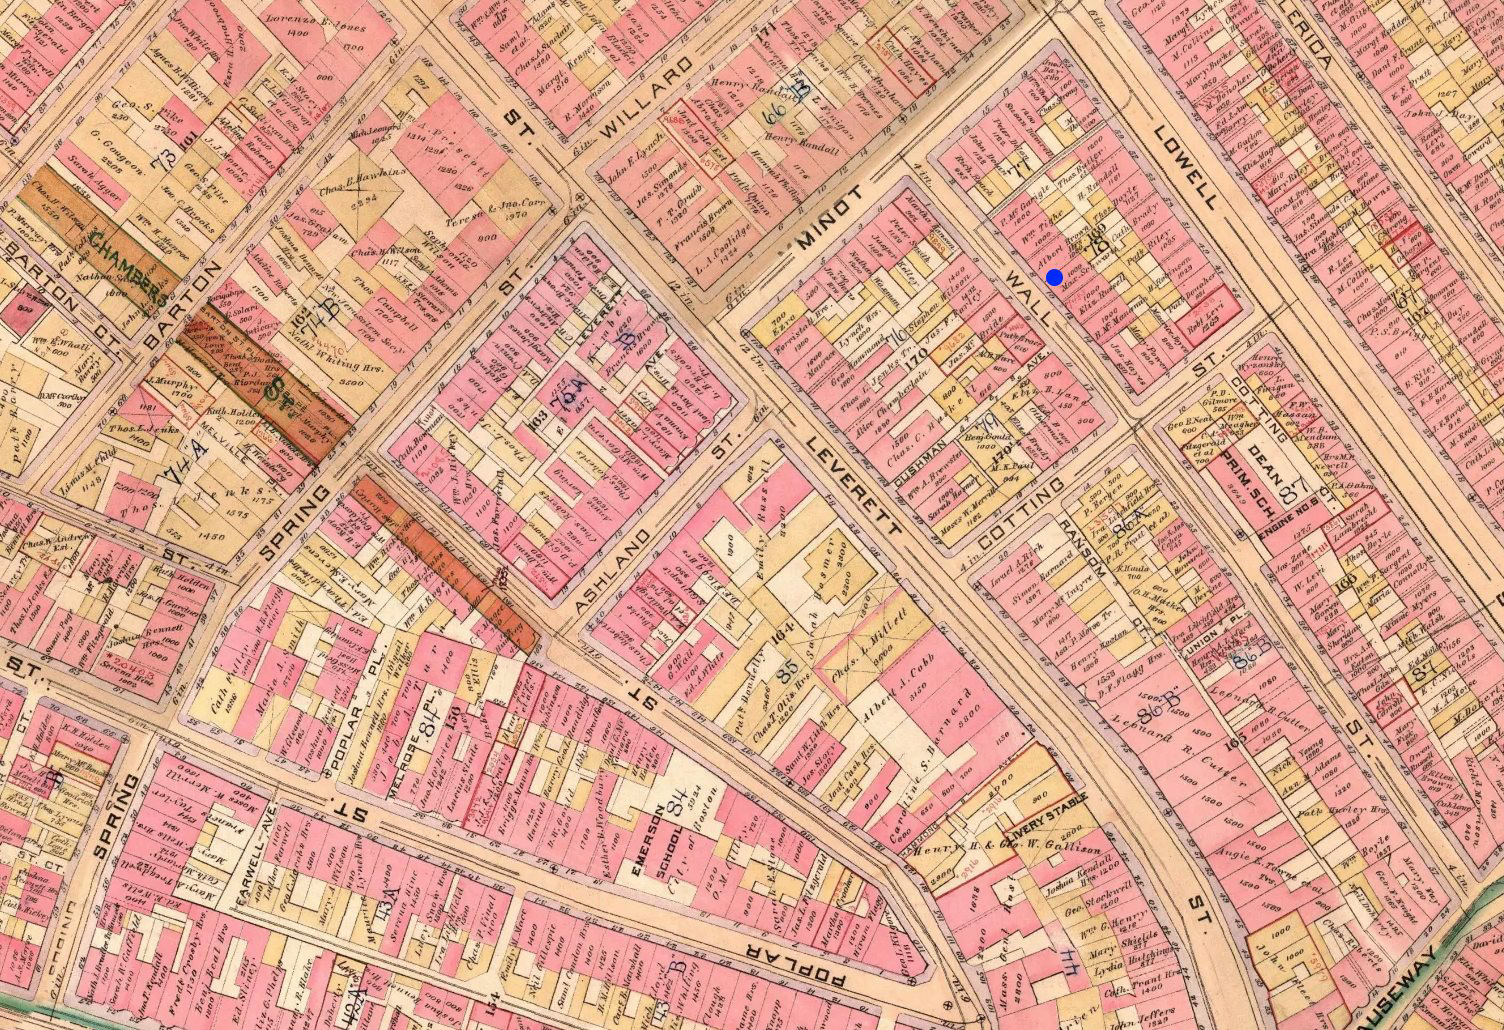 Schwartz Residence on 1888 Boston Bromley Atlas